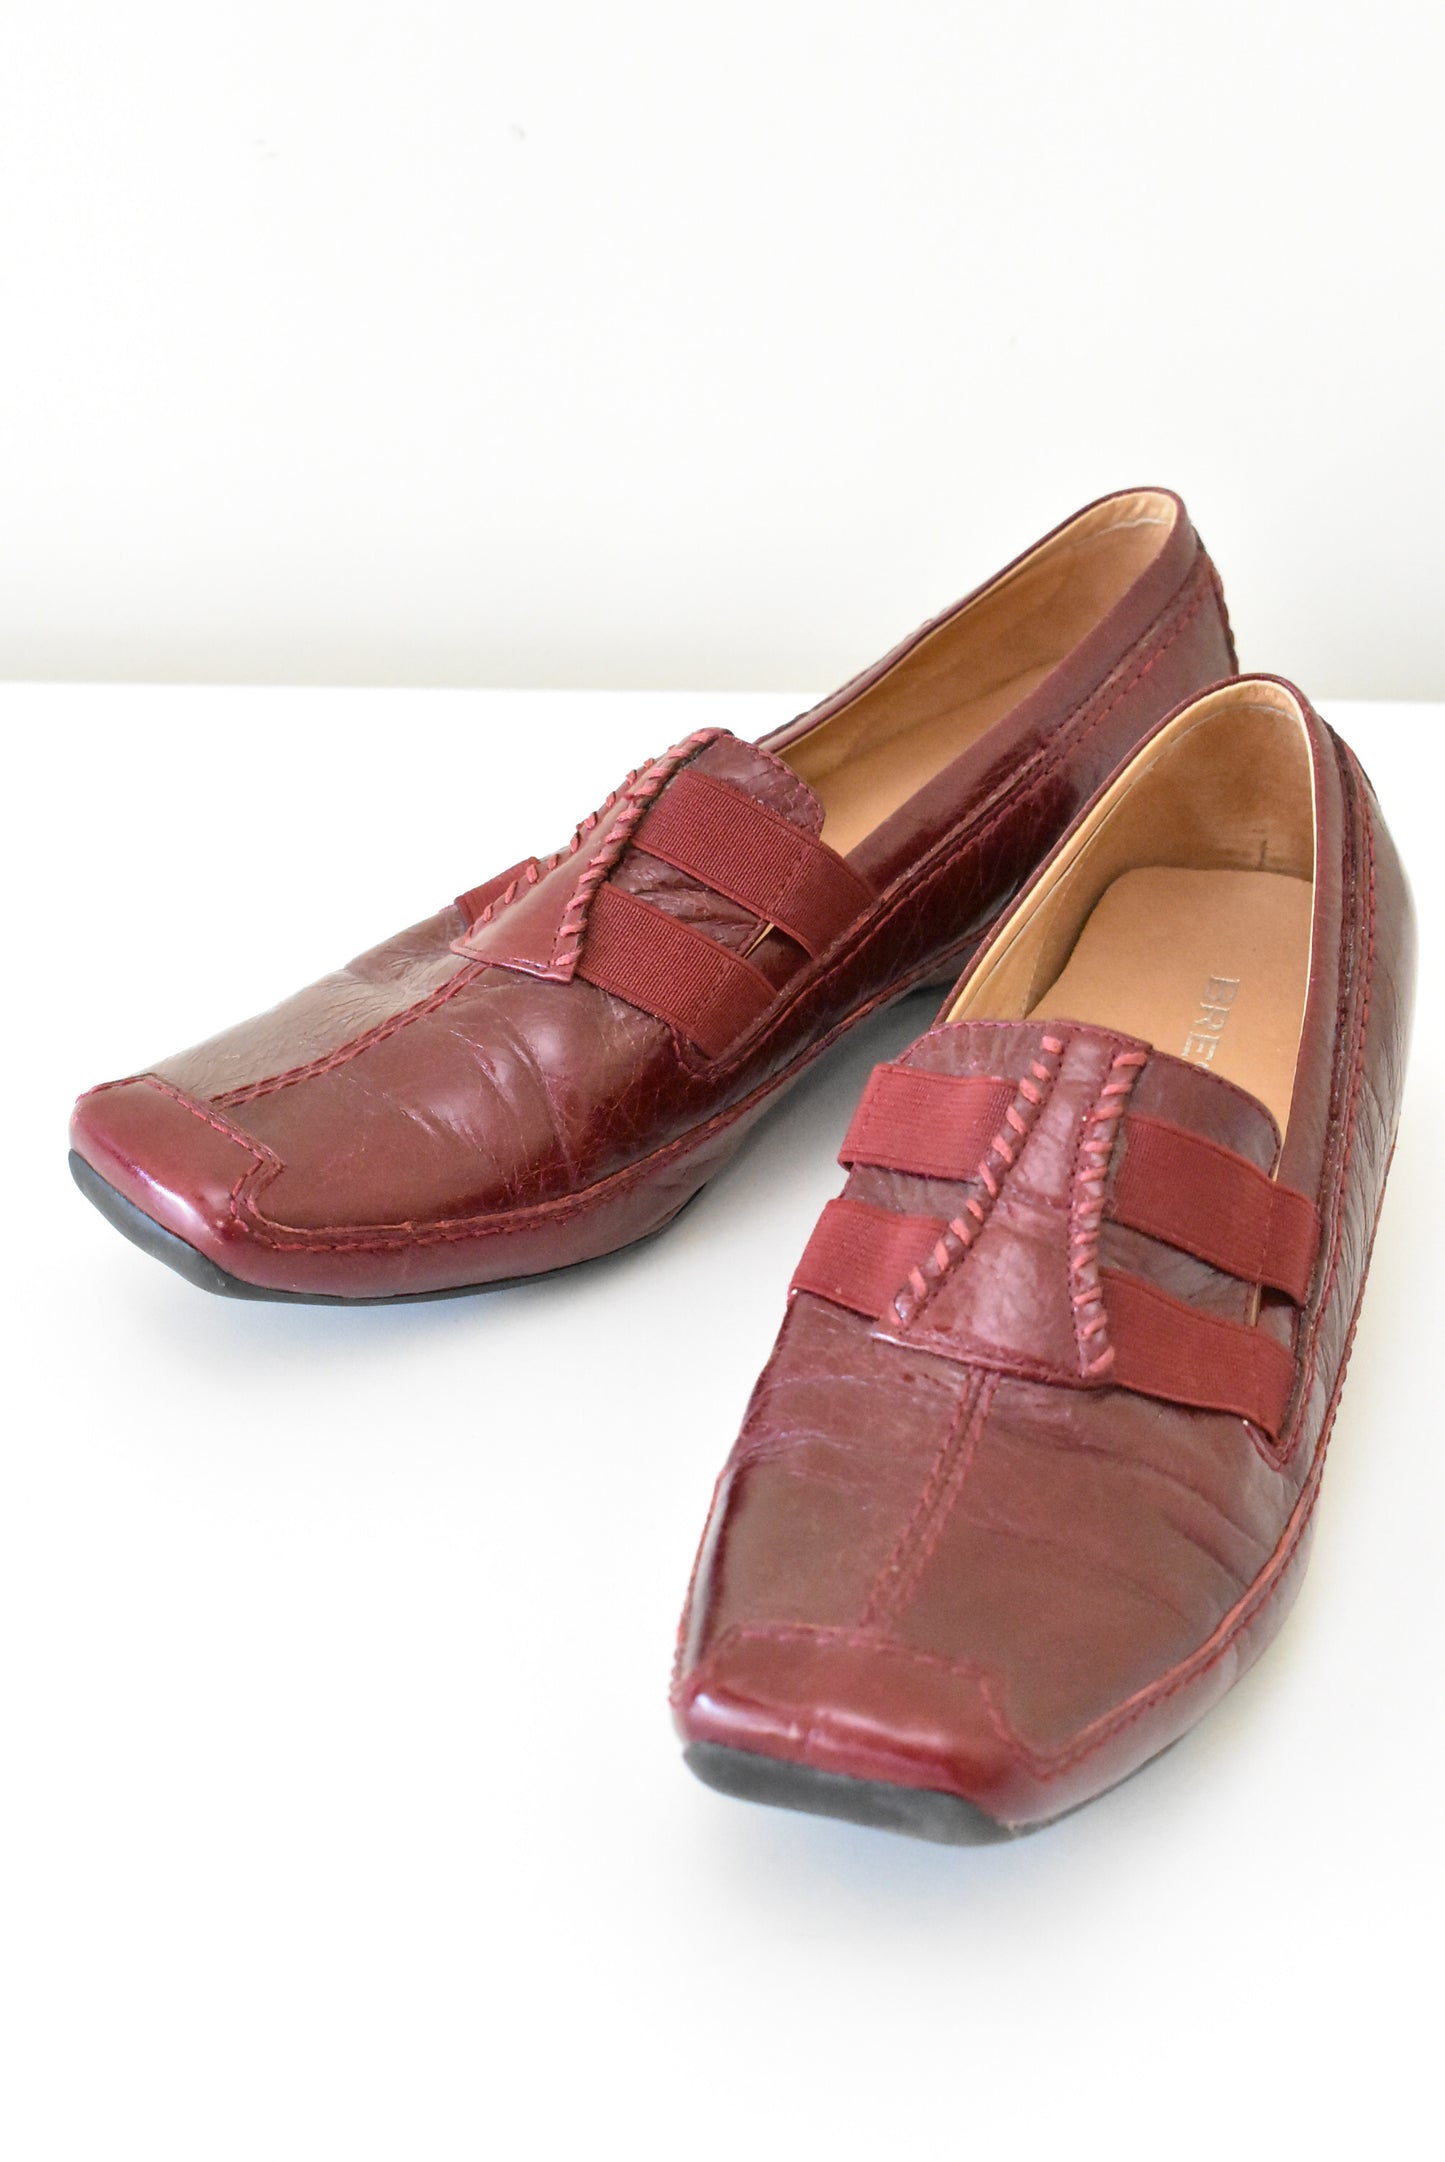 Bresley maroon slip on shoes, 39